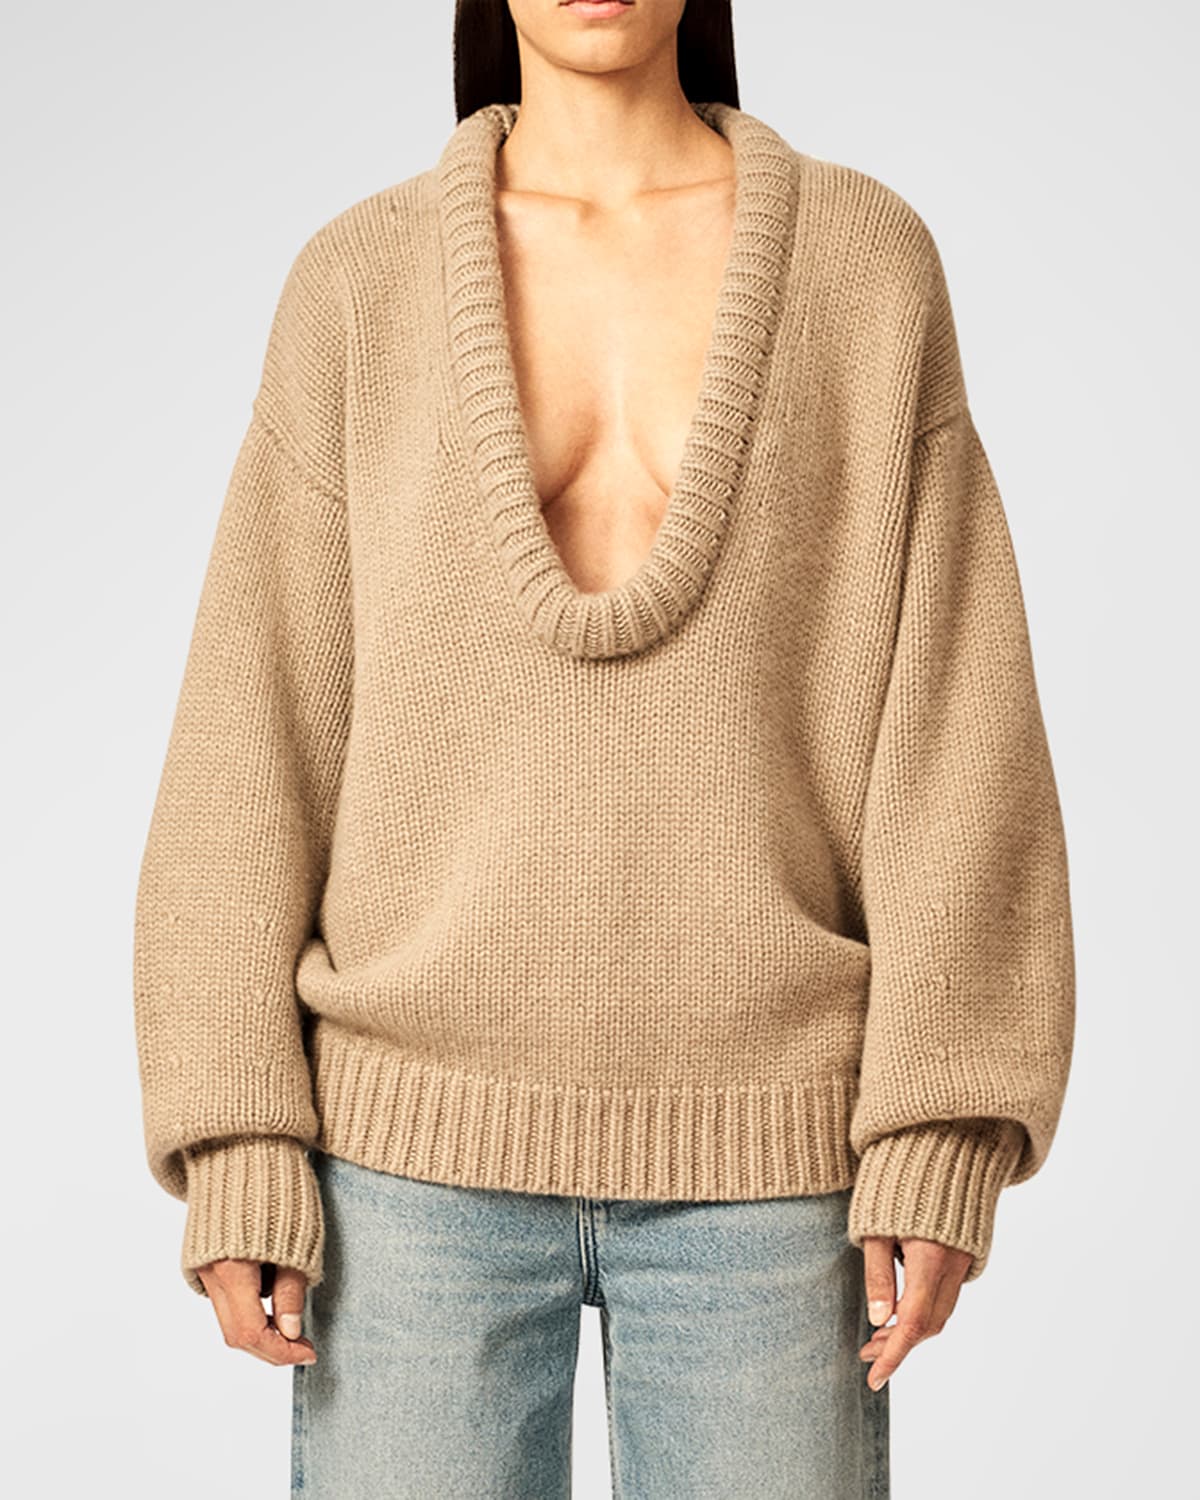 The Bruno Cashmere Sweater